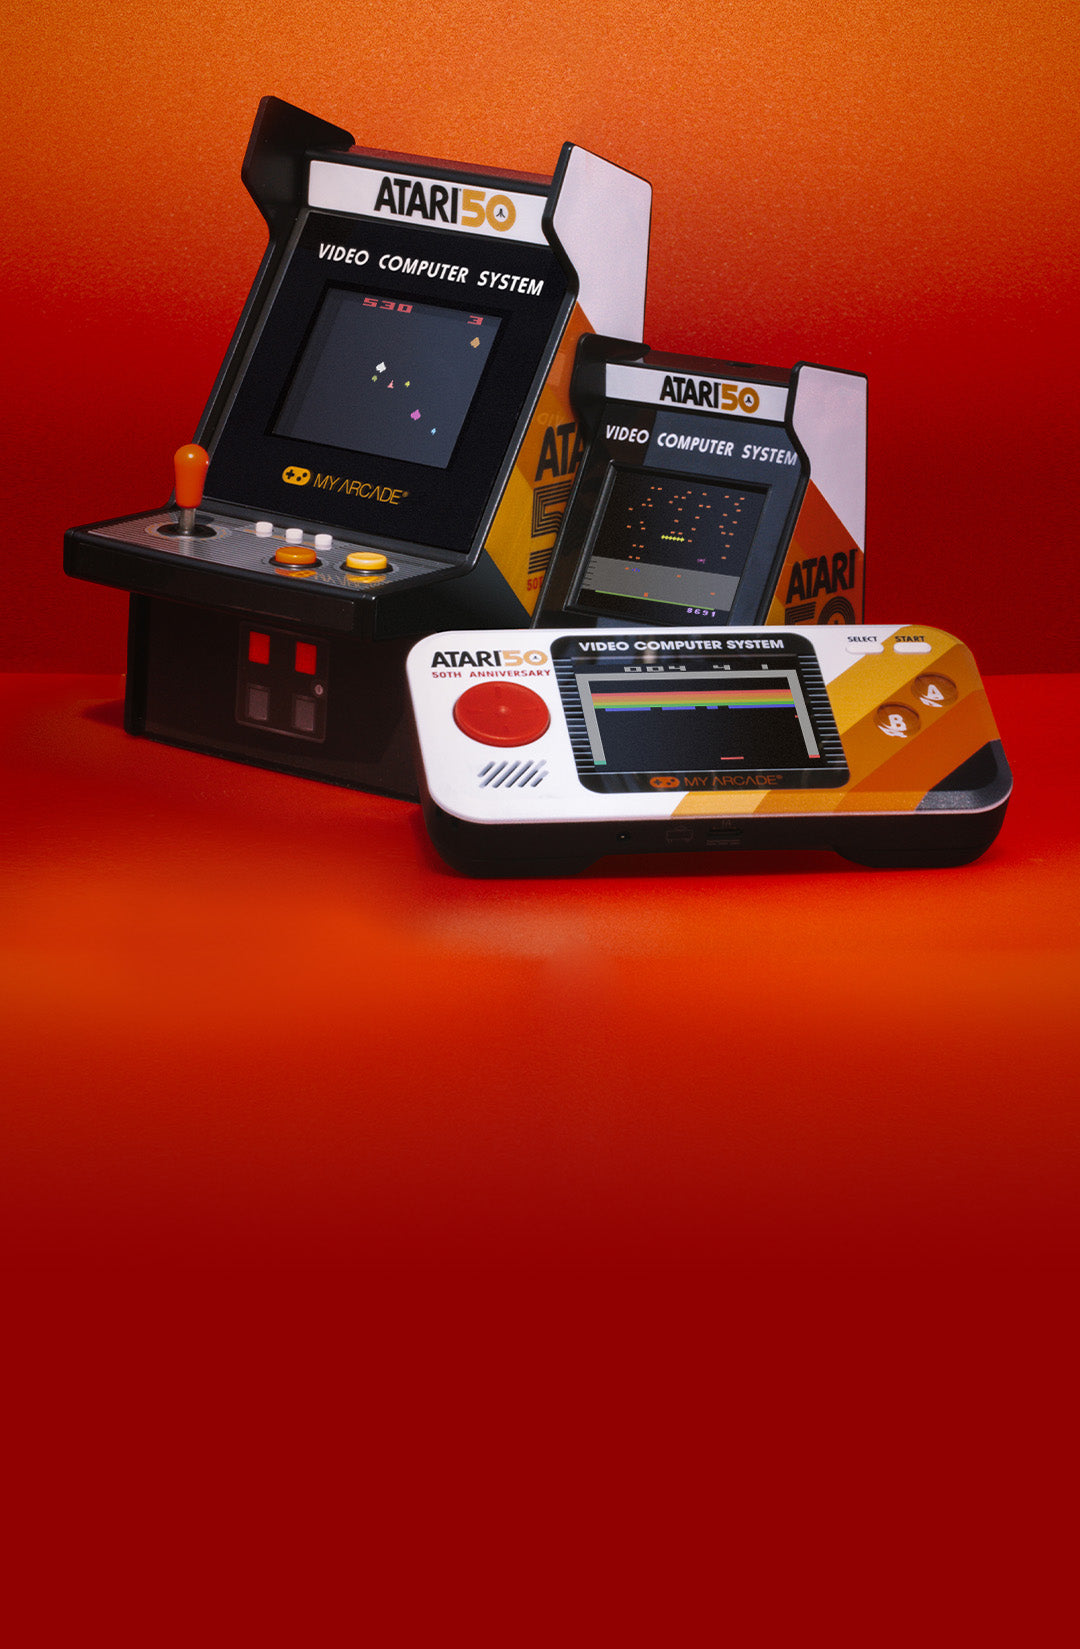 My Arcade Atari Pocket Player Pro